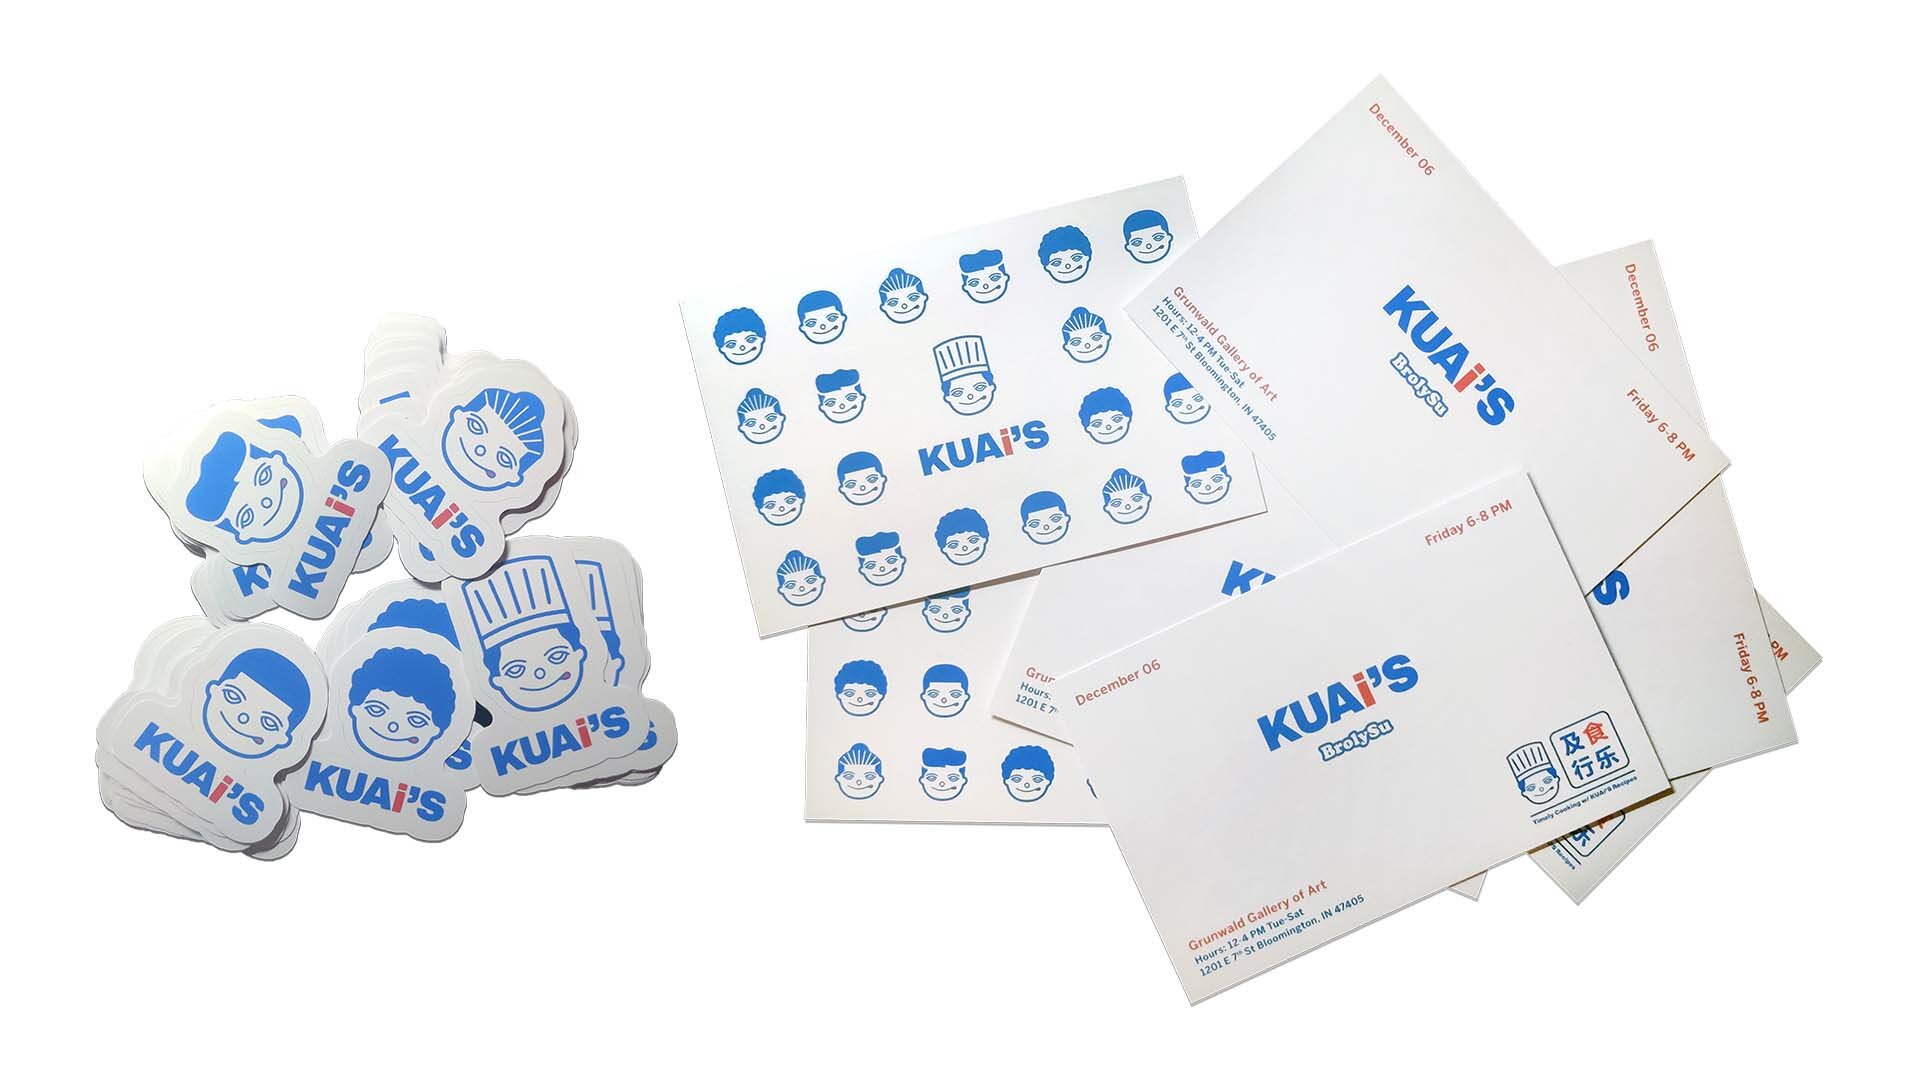 KUAi'S Stickers + Show Cards.jpg